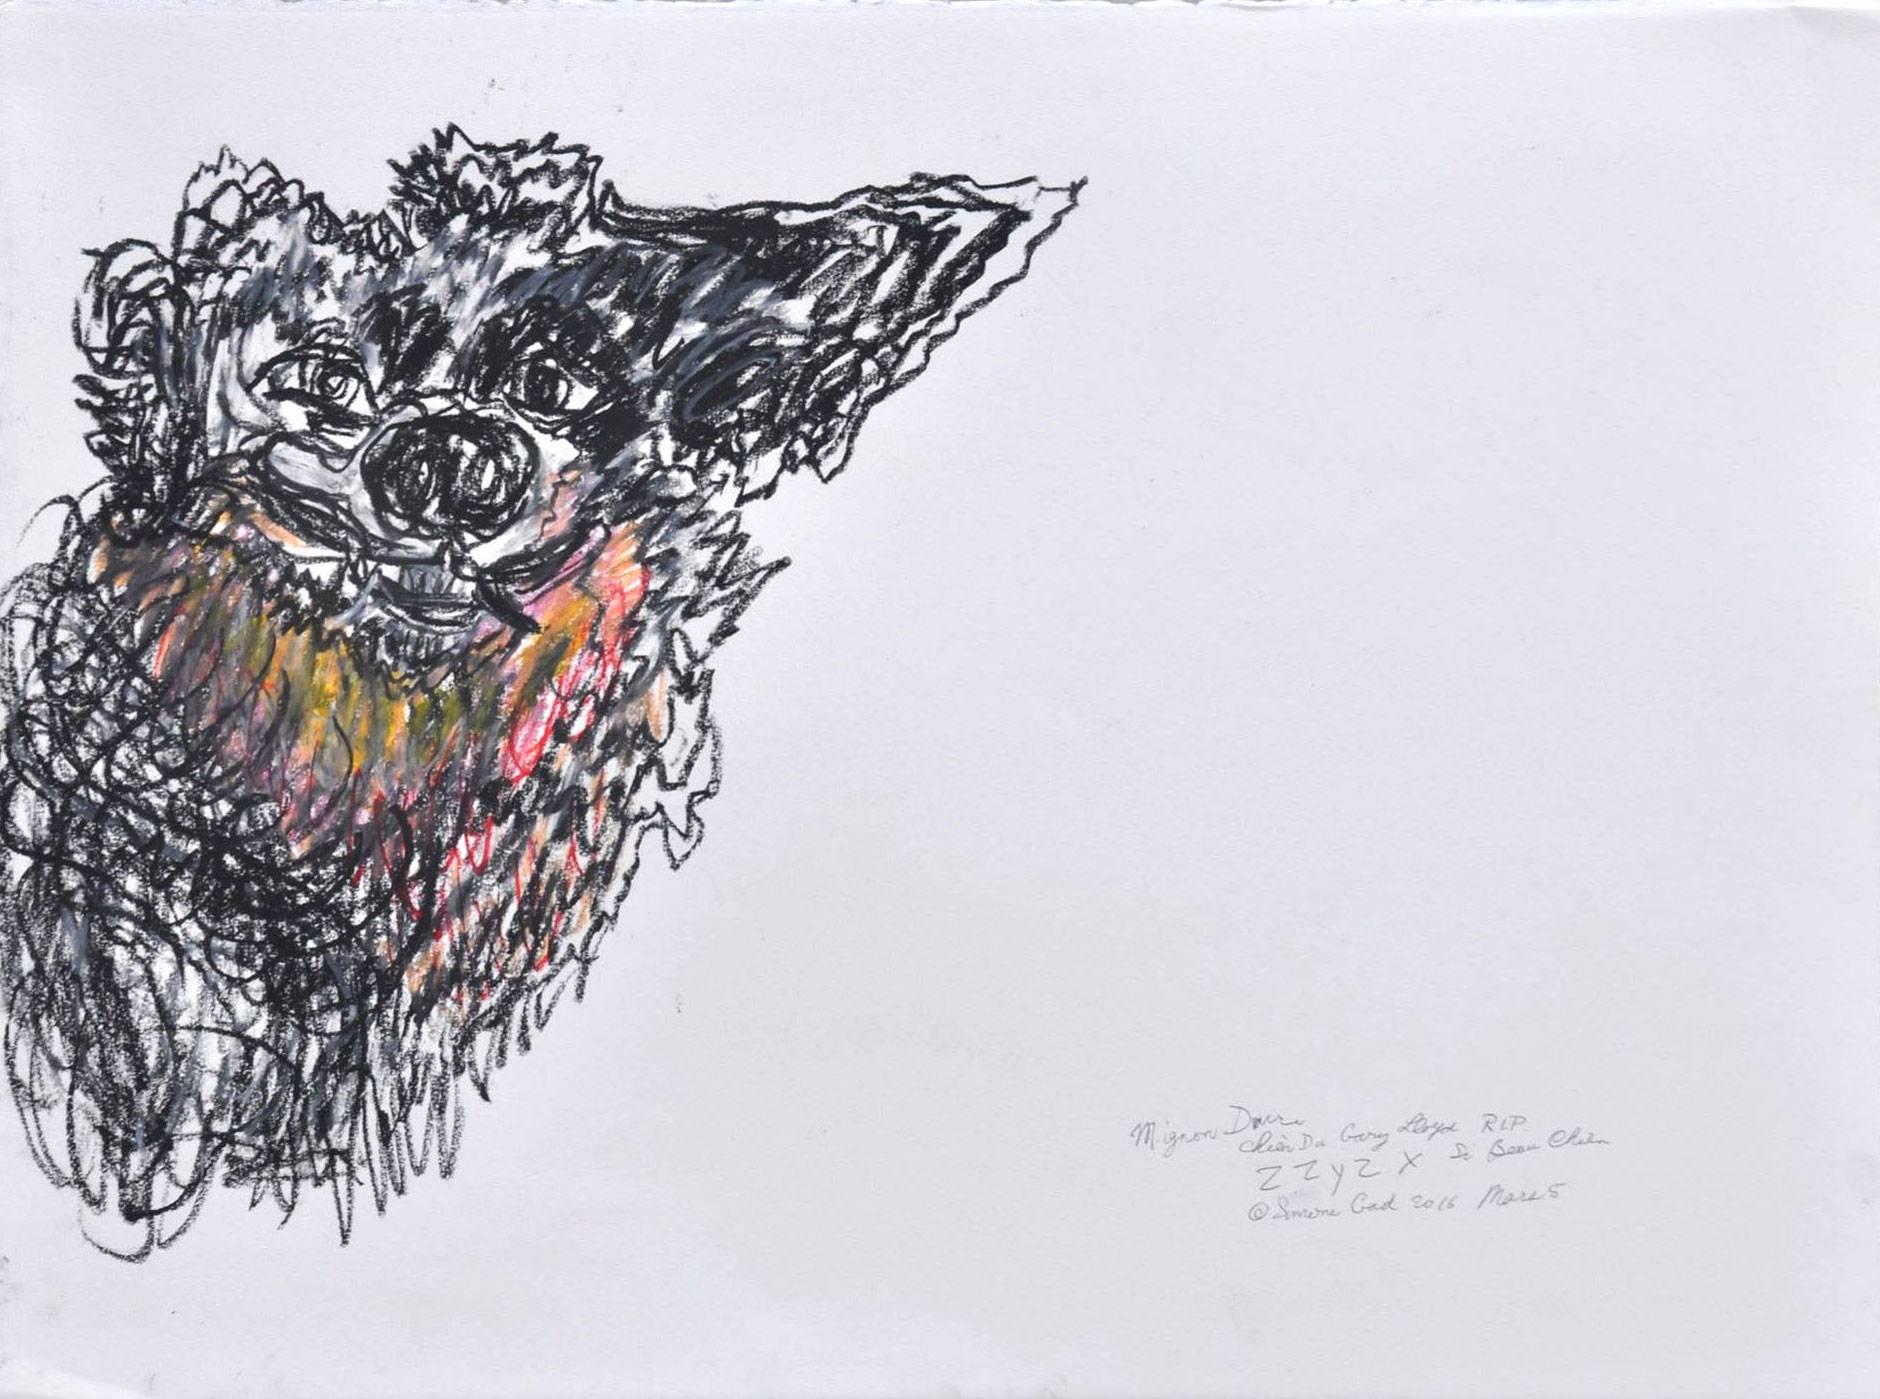 Simone Gad Animal Art - Mignon Chien RIP Du Gary Lloyd